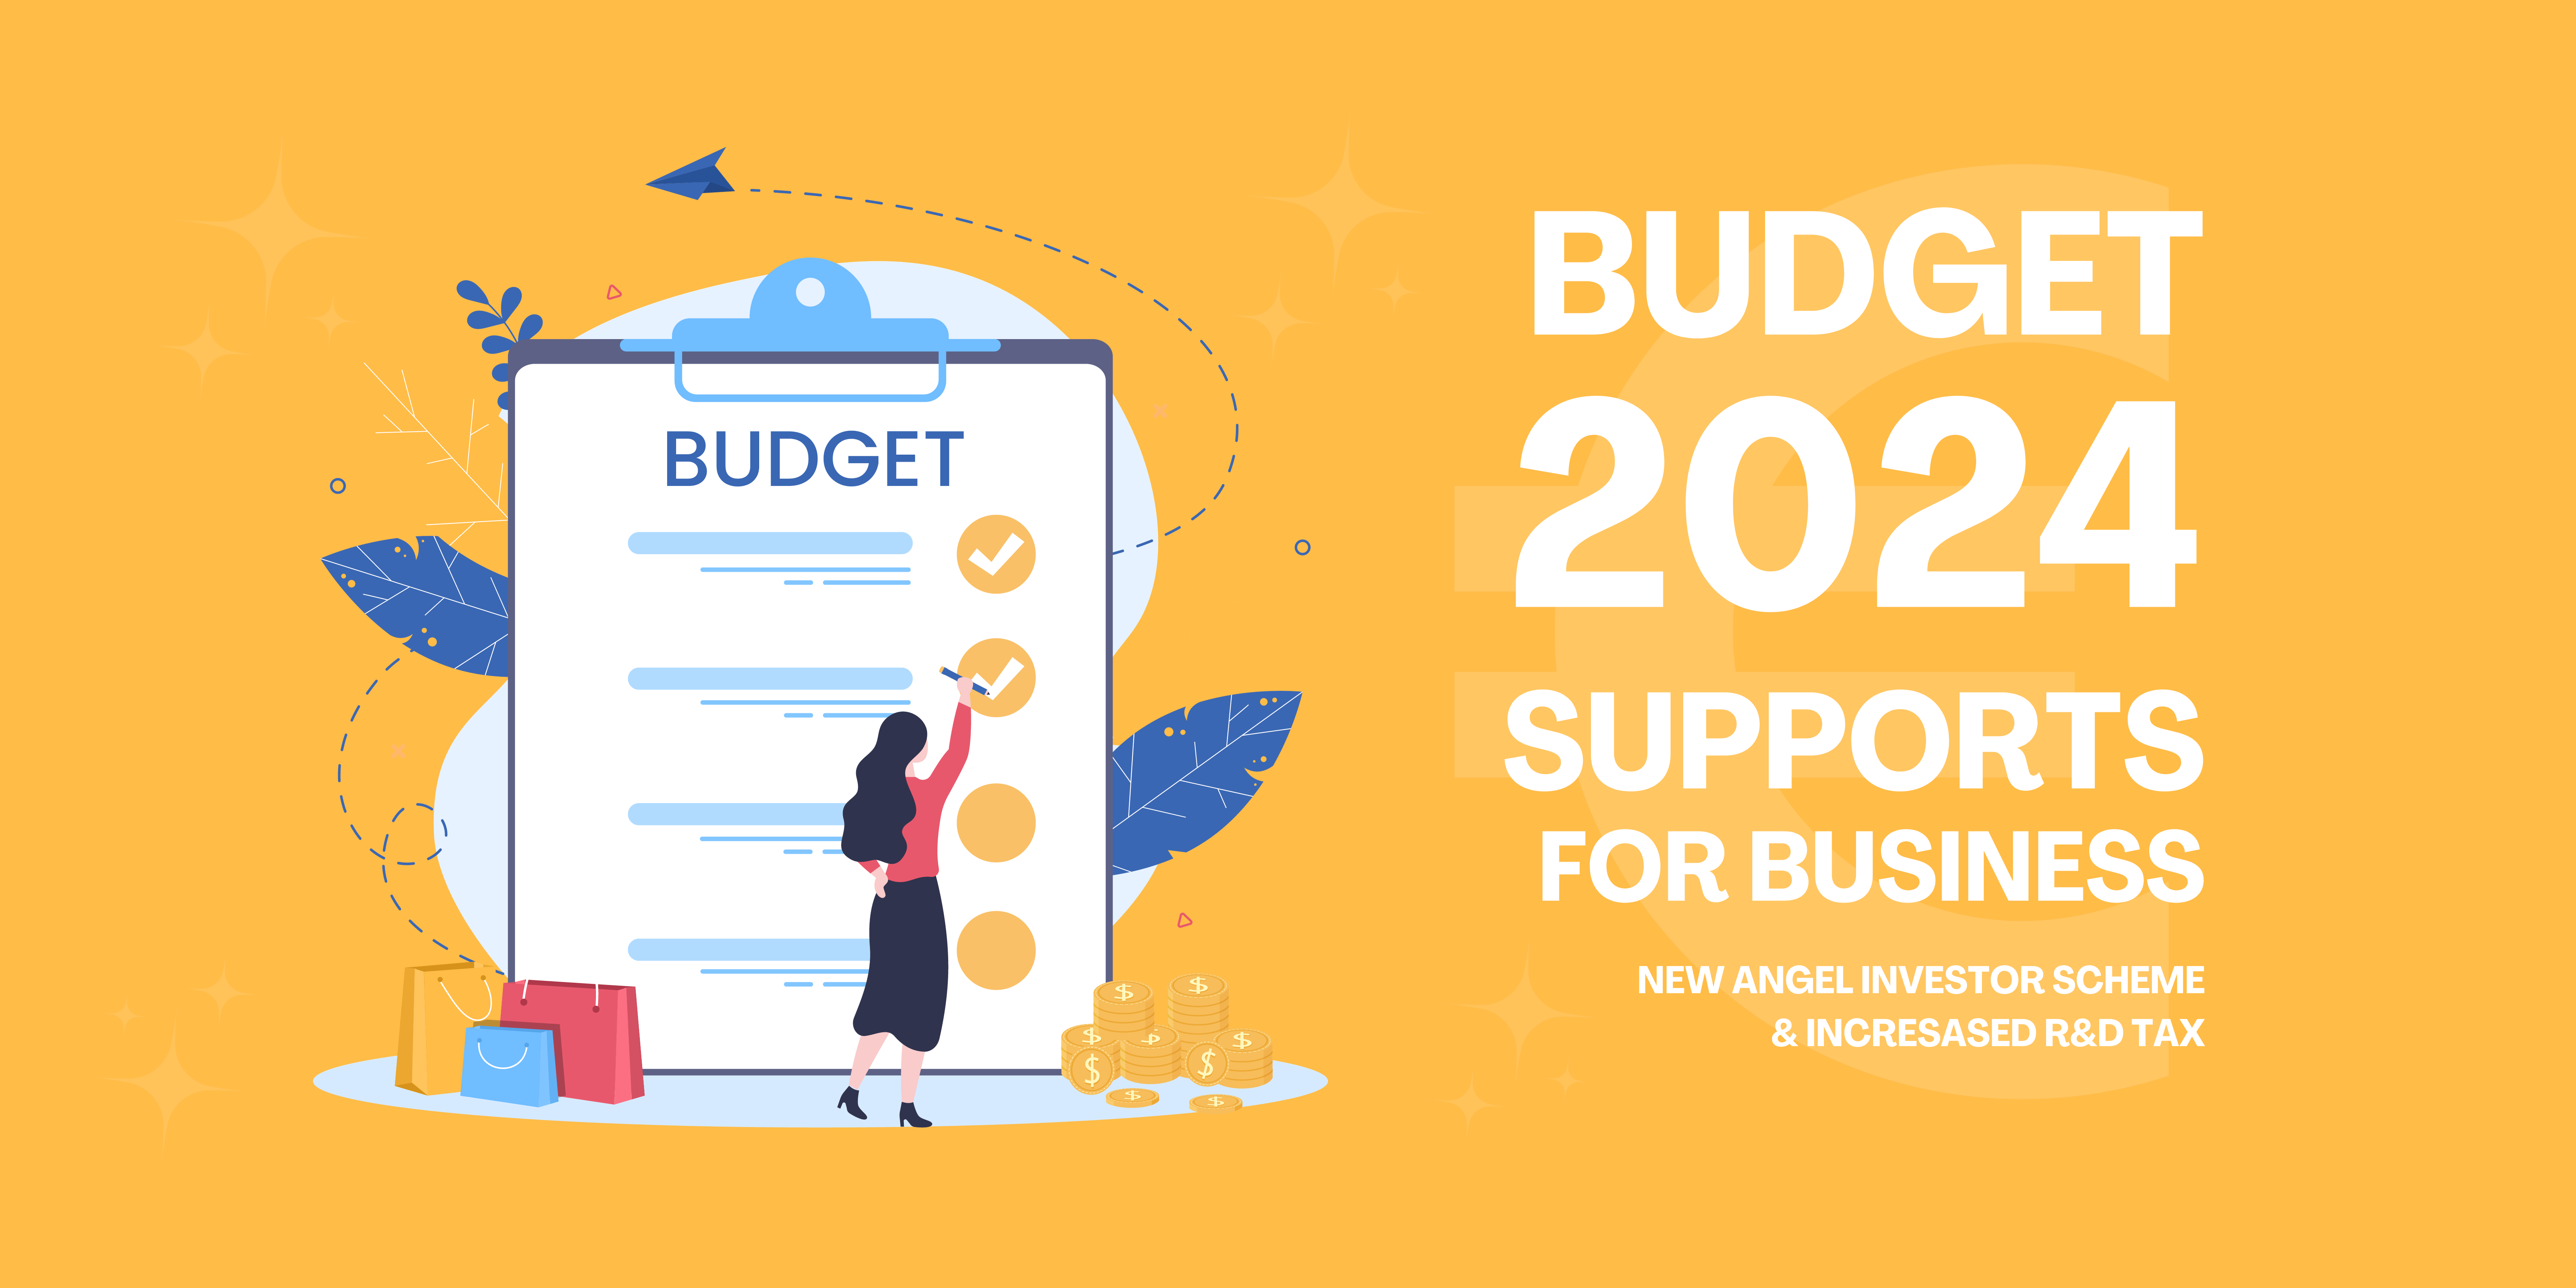 Budget 2024 Blog Post Banner, yellow graphic